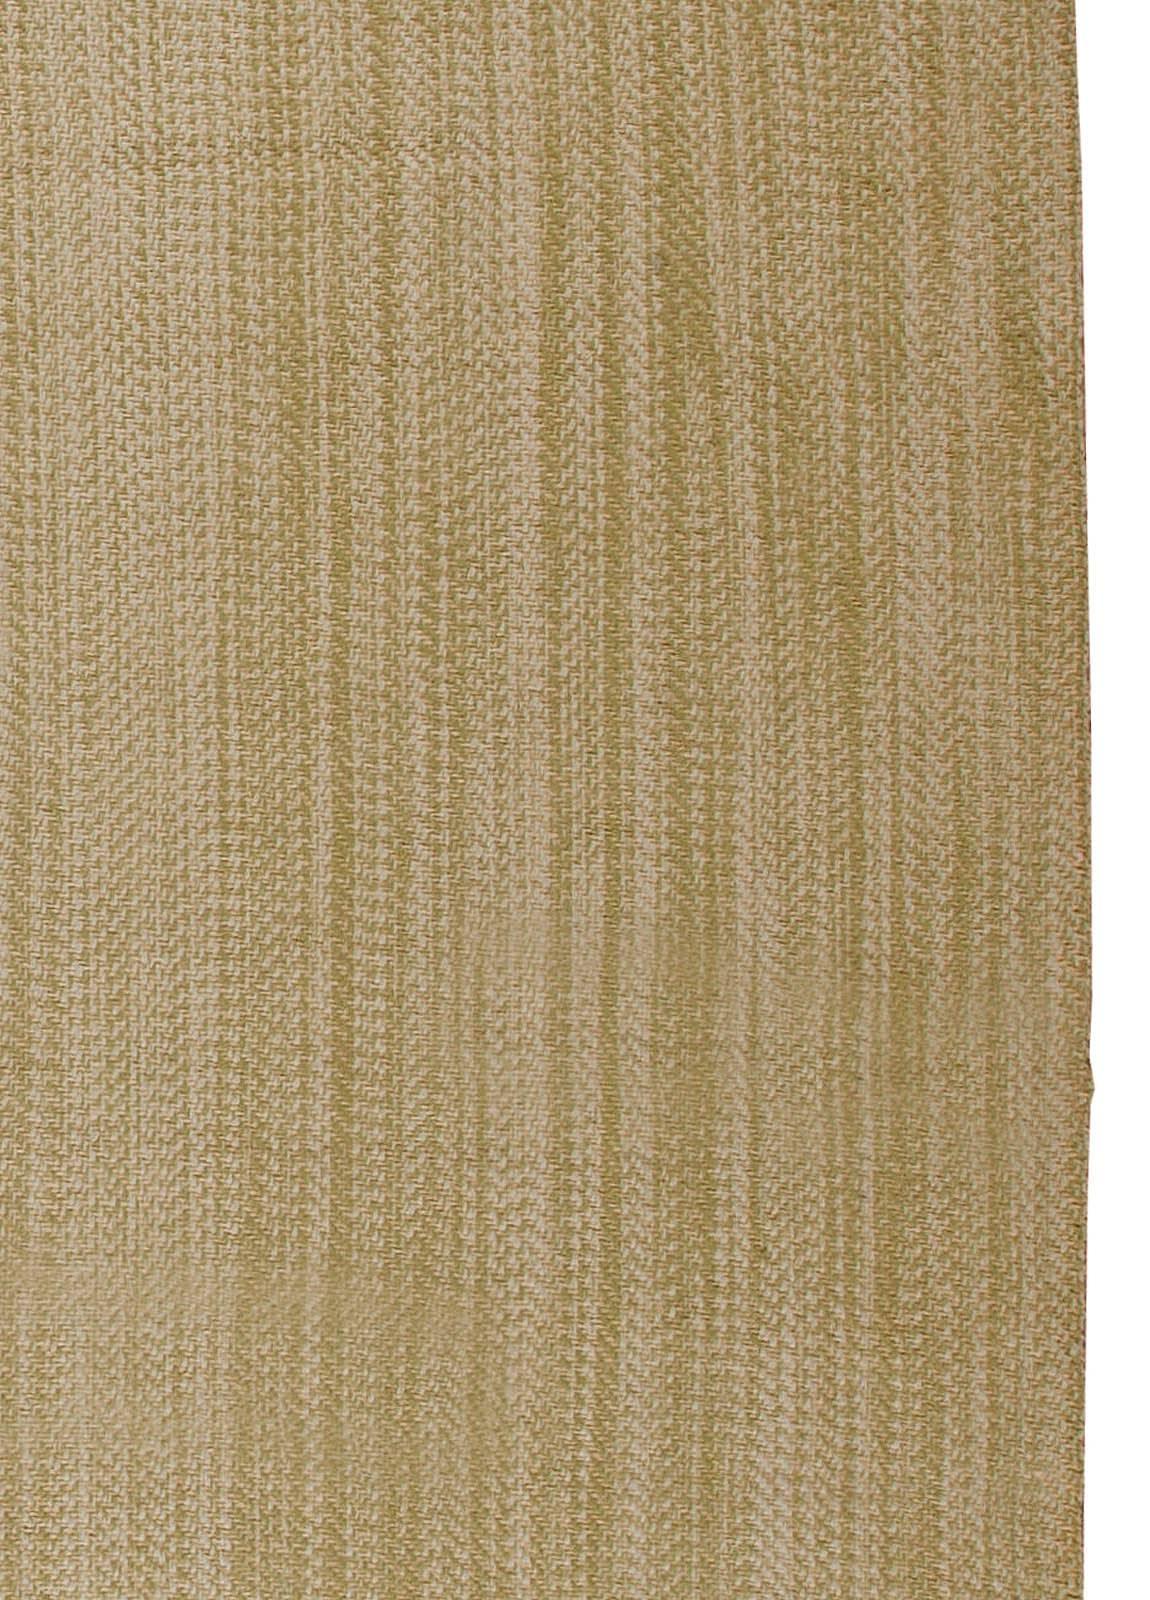 Hand-Woven Large Striped De Lys Beige Flat-Weave Wool Rug by Doris Leslie Blau For Sale